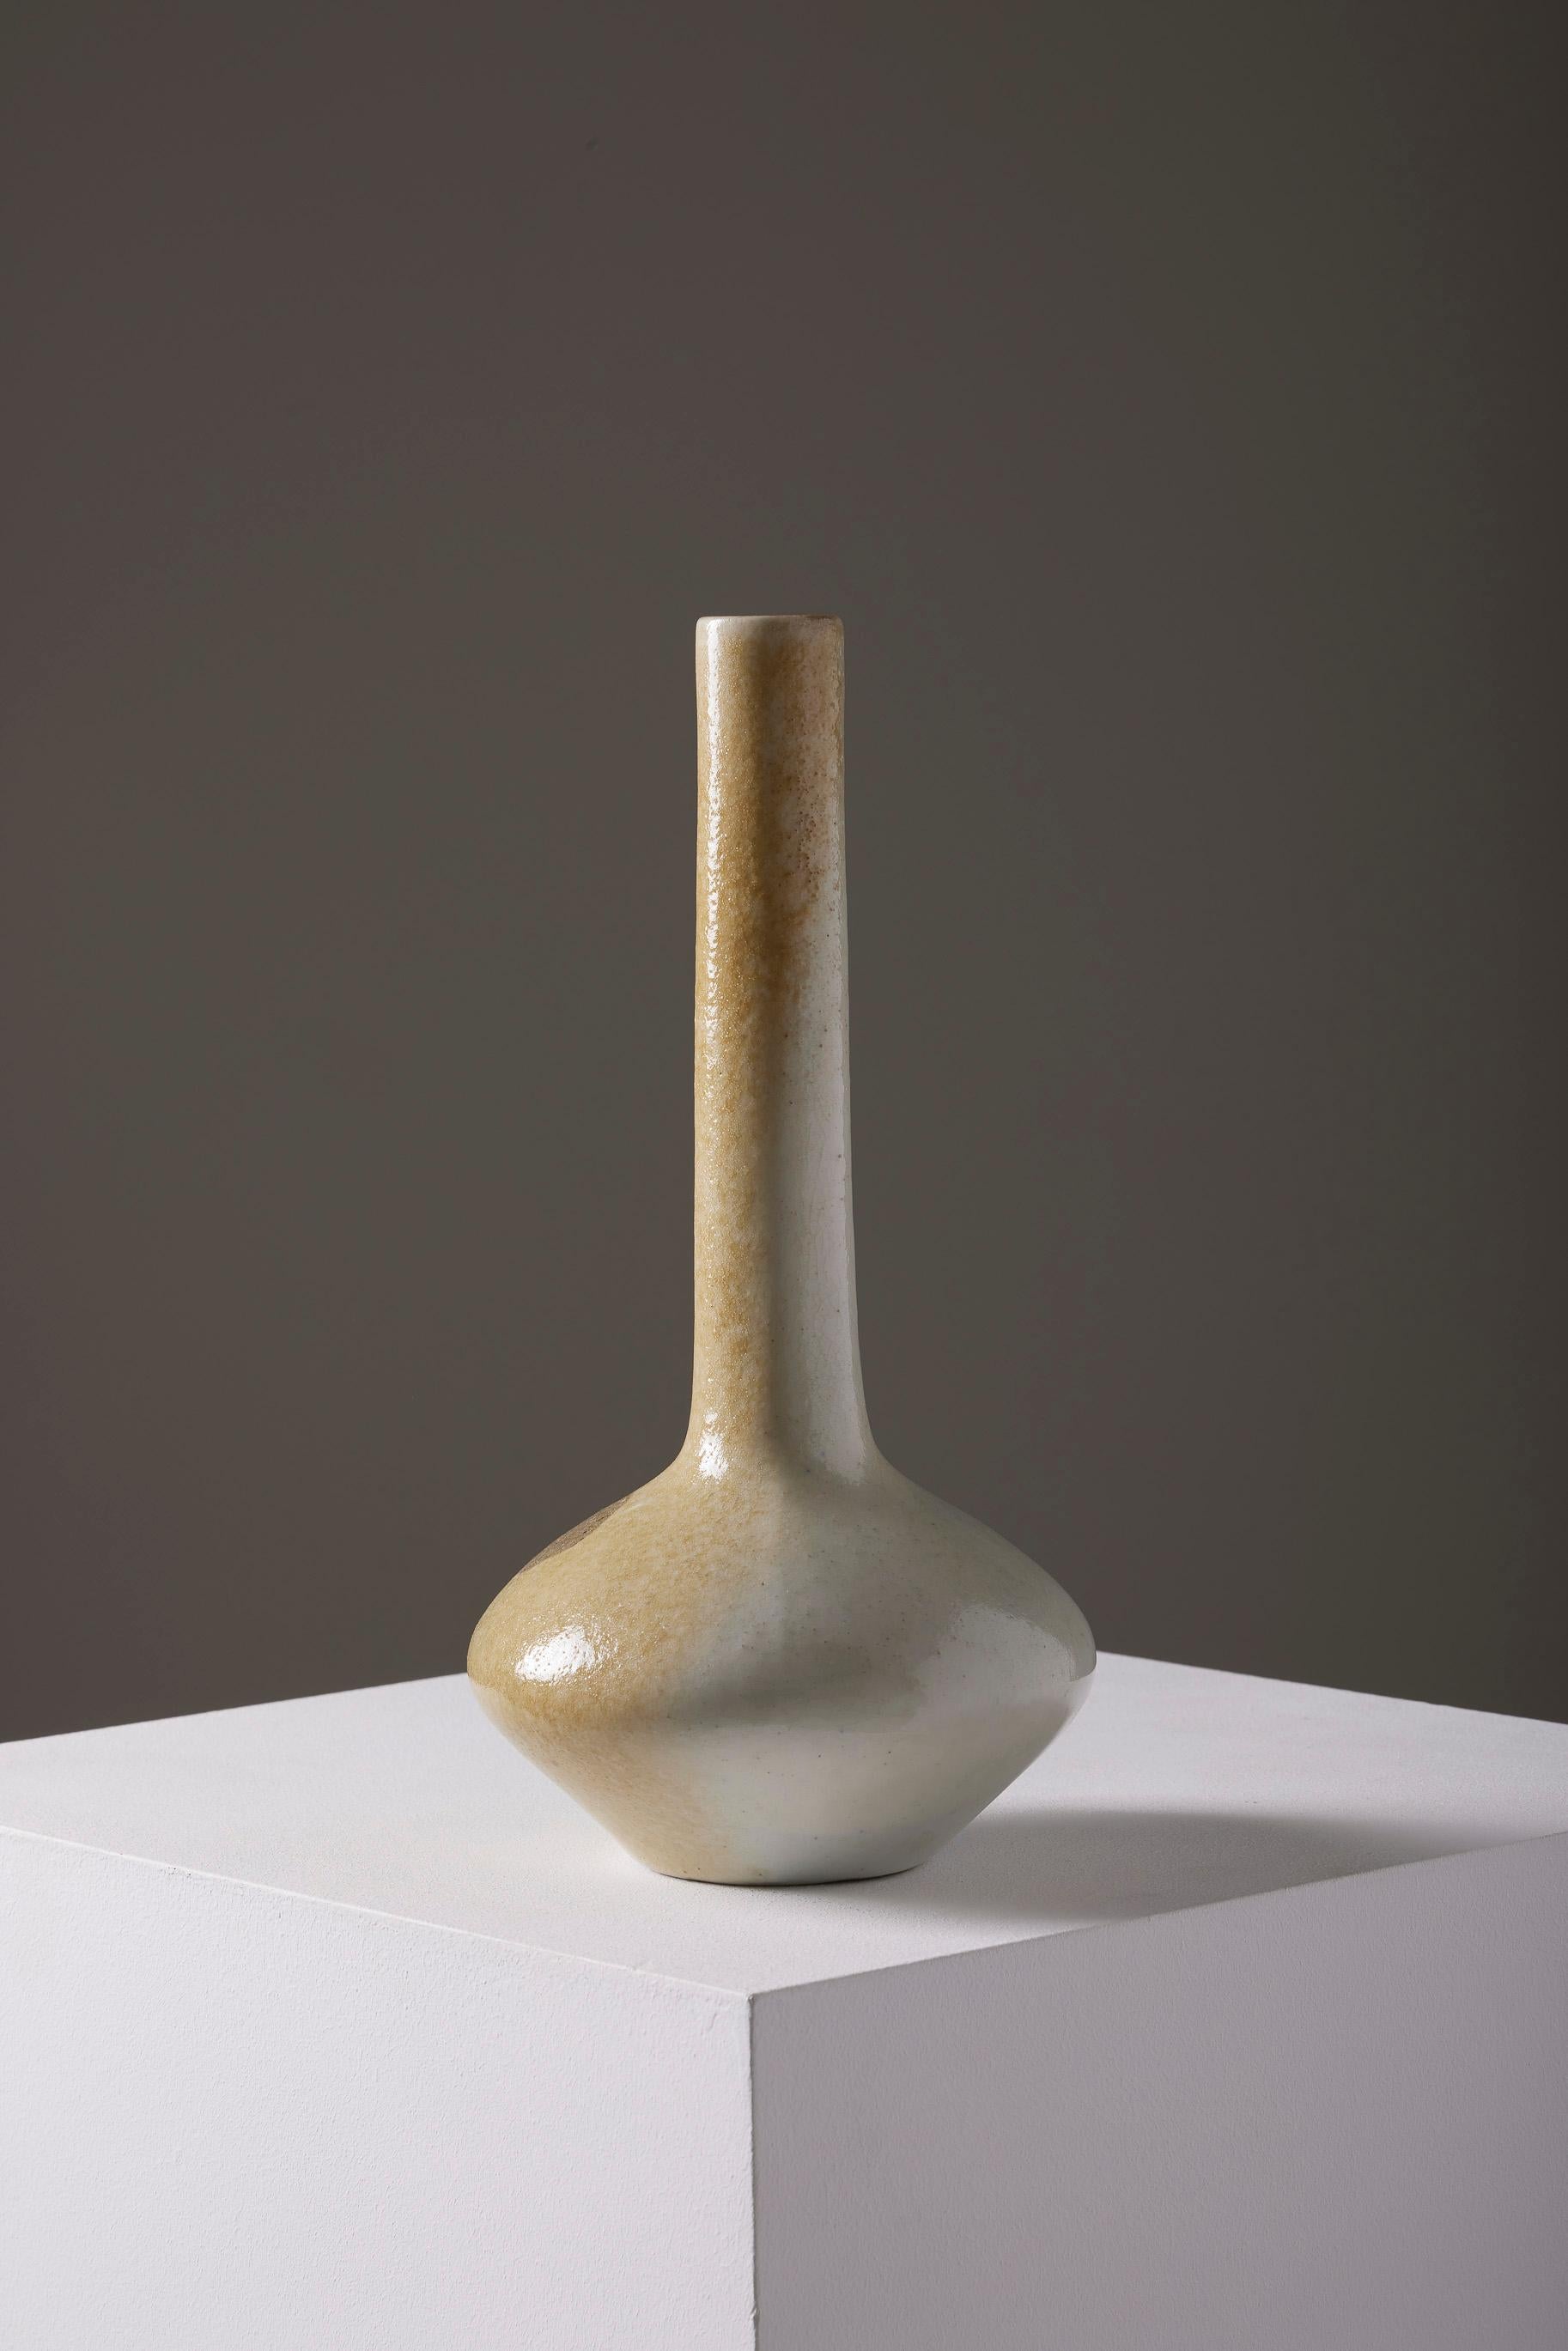 Tim Orr Vase In Excellent Condition For Sale In PARIS, FR